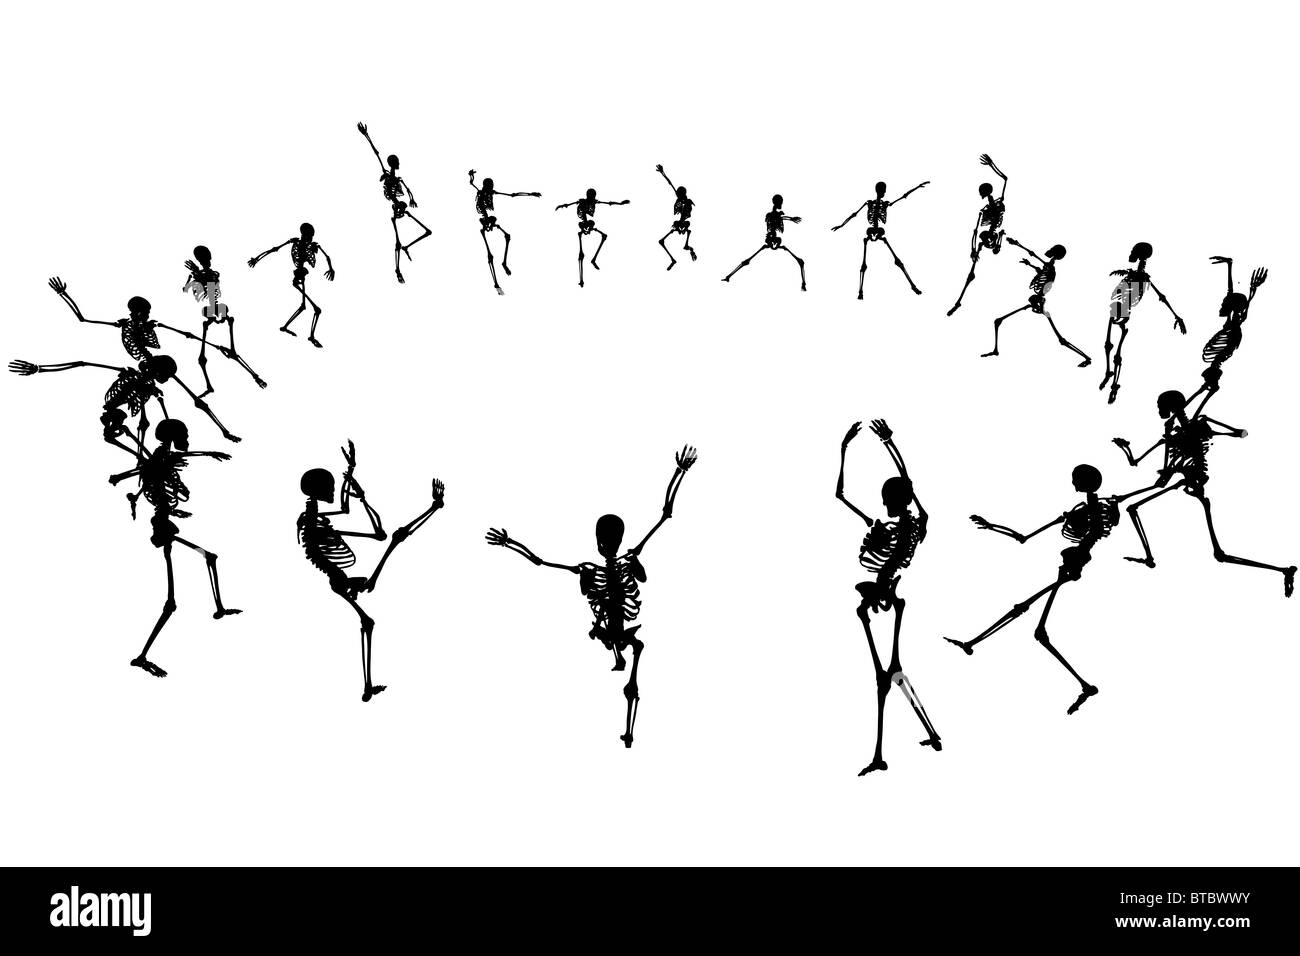 Illustrierten Skelett Silhouetten tanzen in einem ring Stockfoto